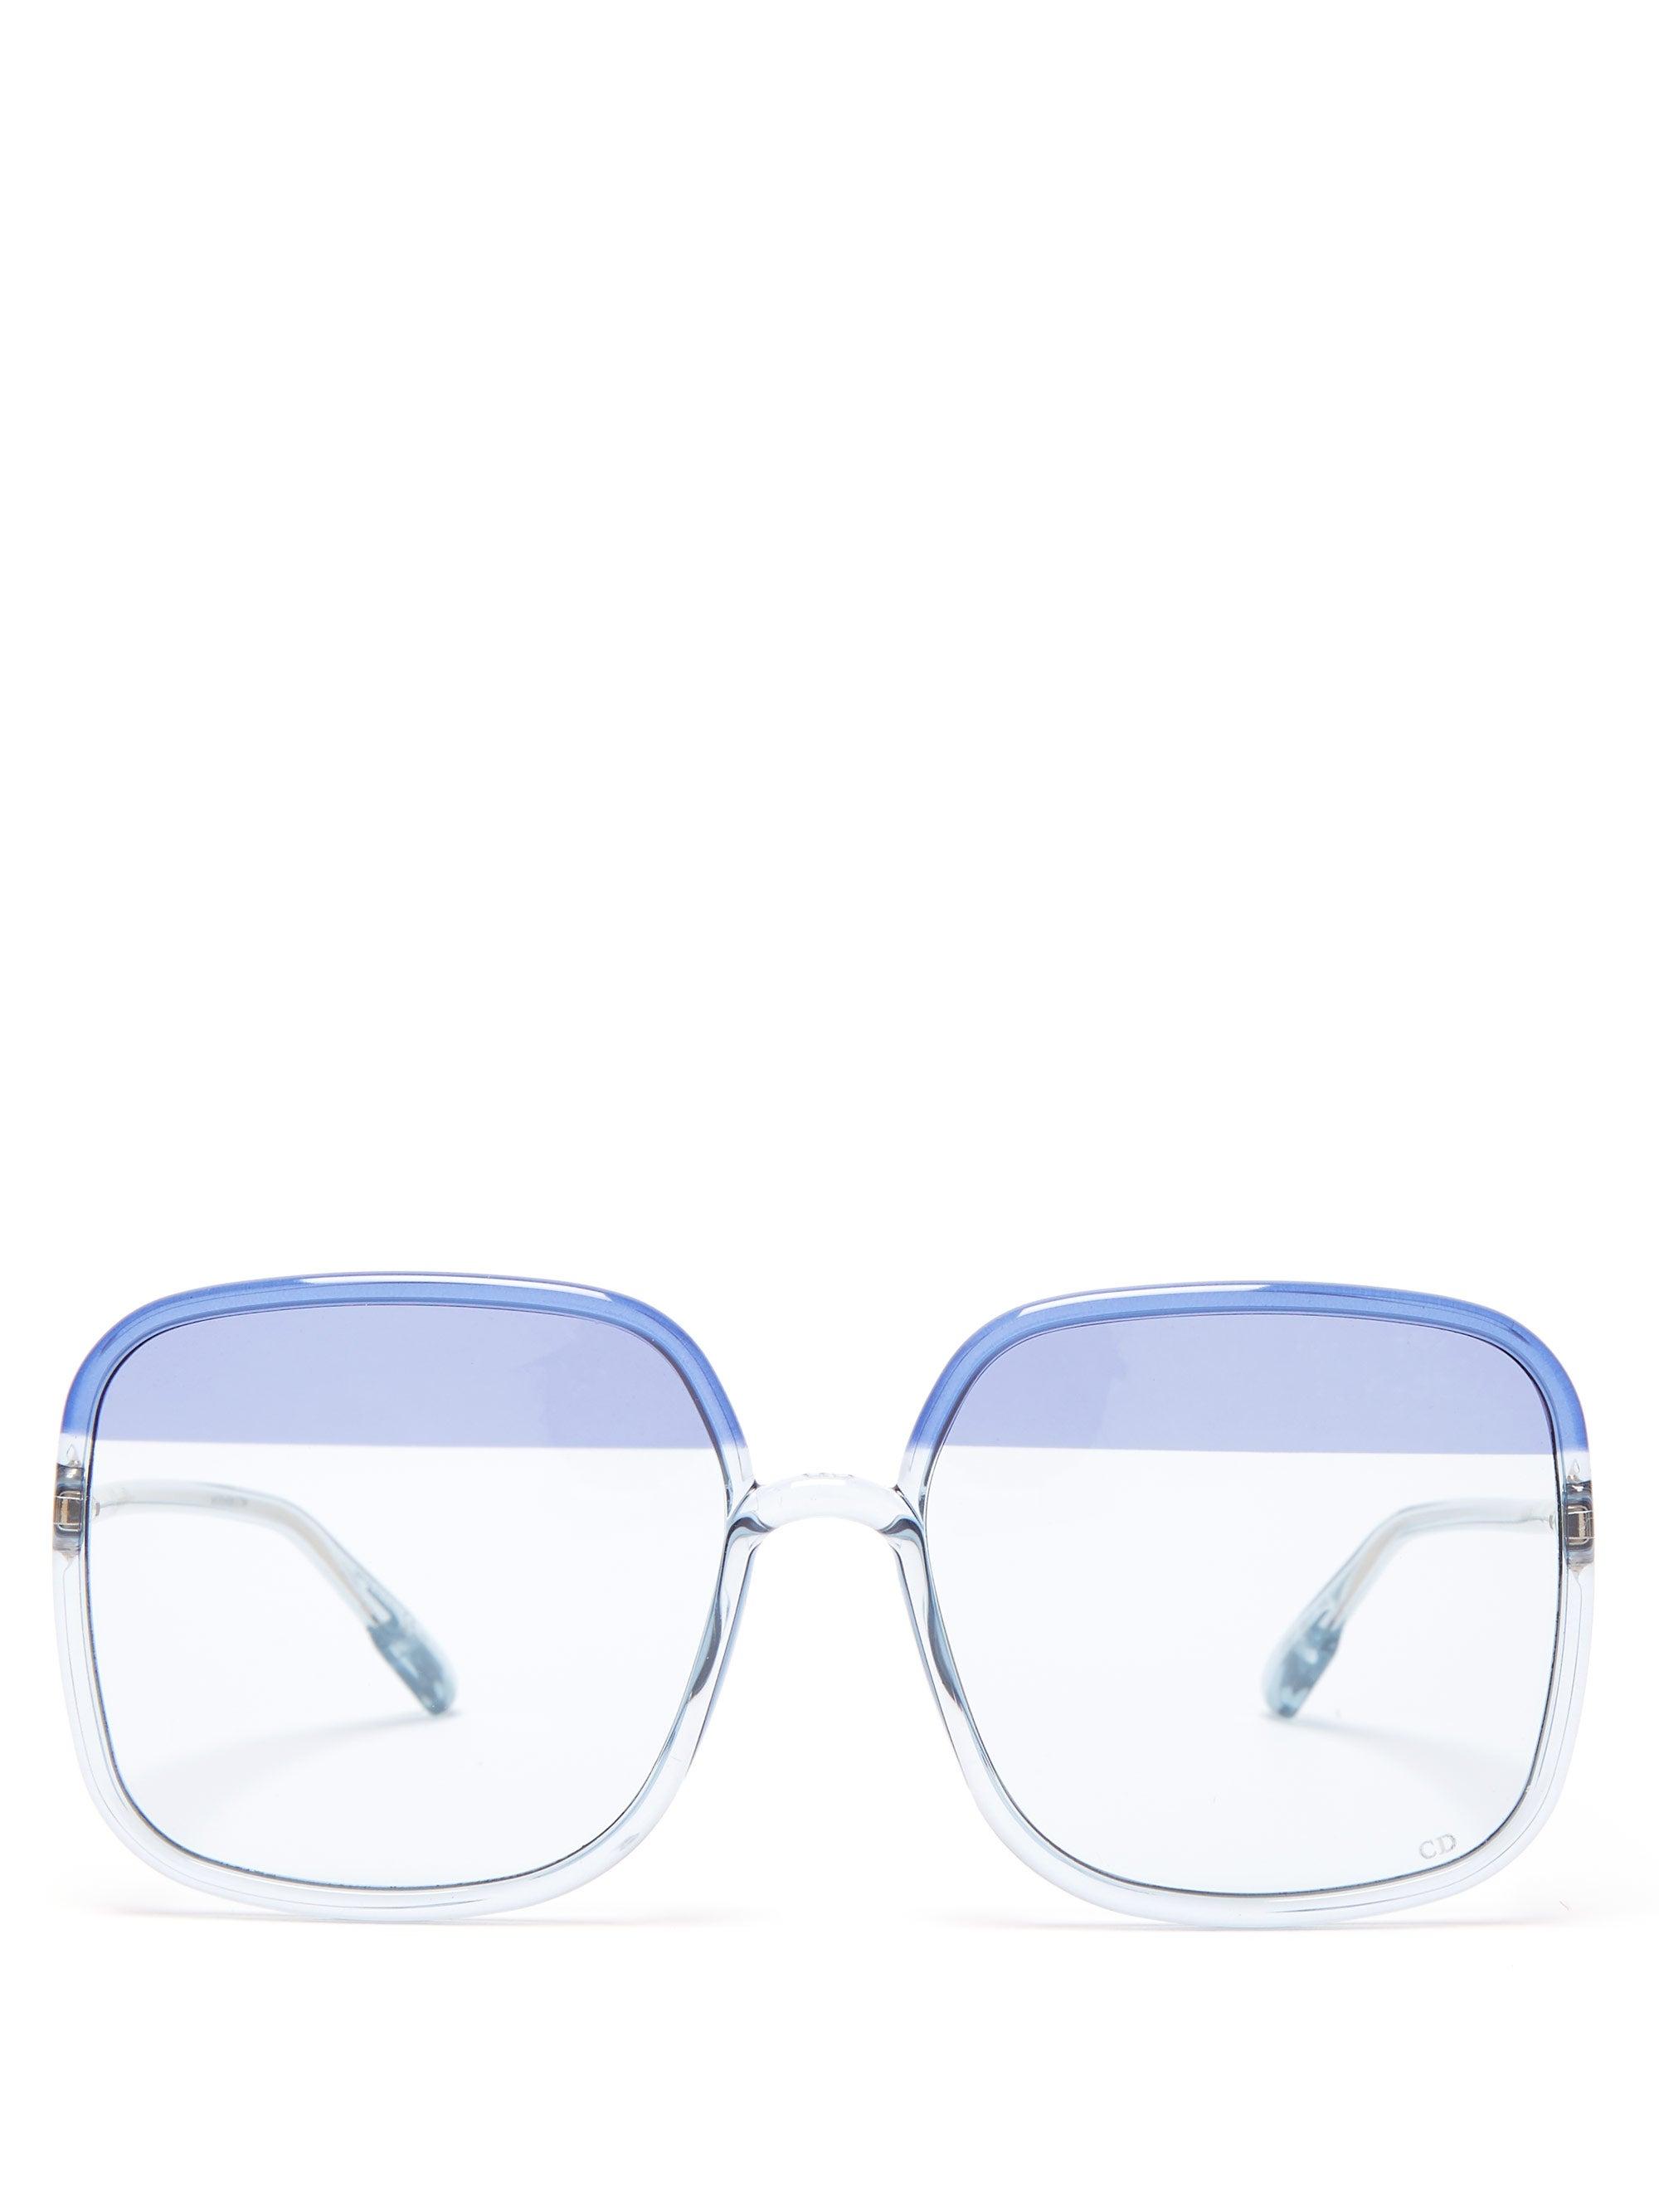 Dior So Stellaire 1 Square Acetate Sunglasses in Blue | Lyst